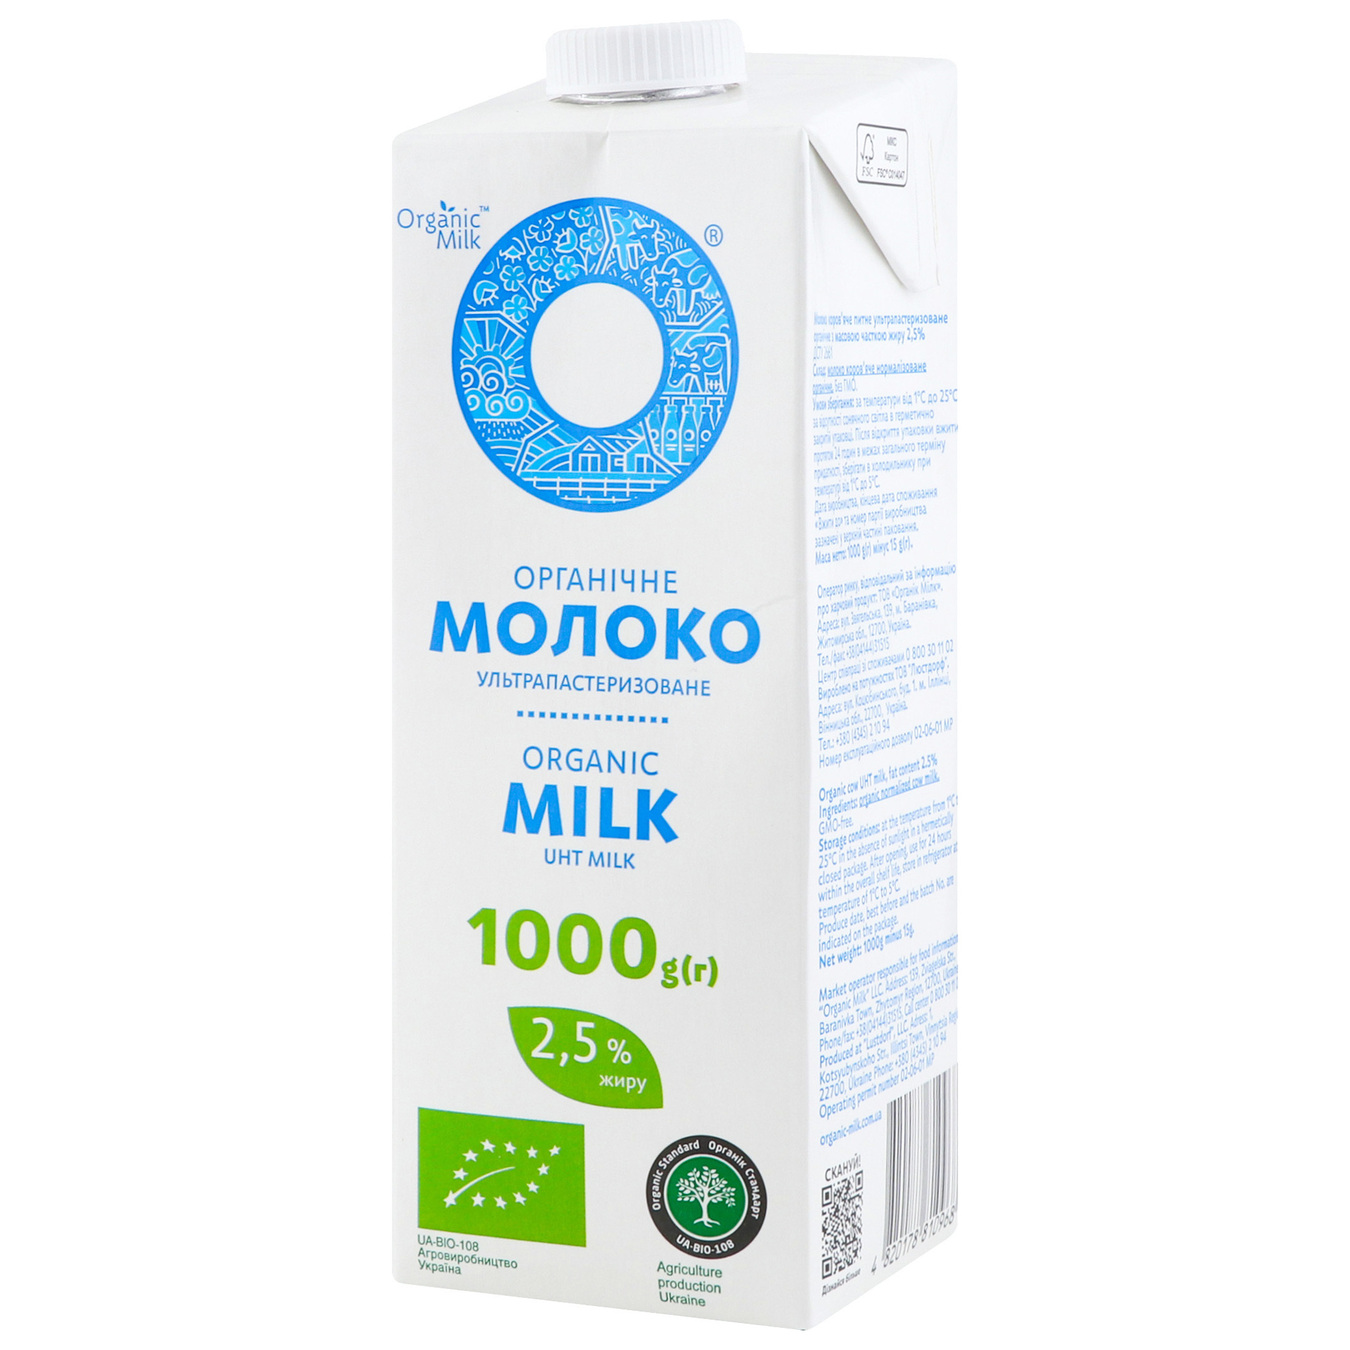 Organic Milk  Milk  ultra-pasteurized 2.5% 1000g   4